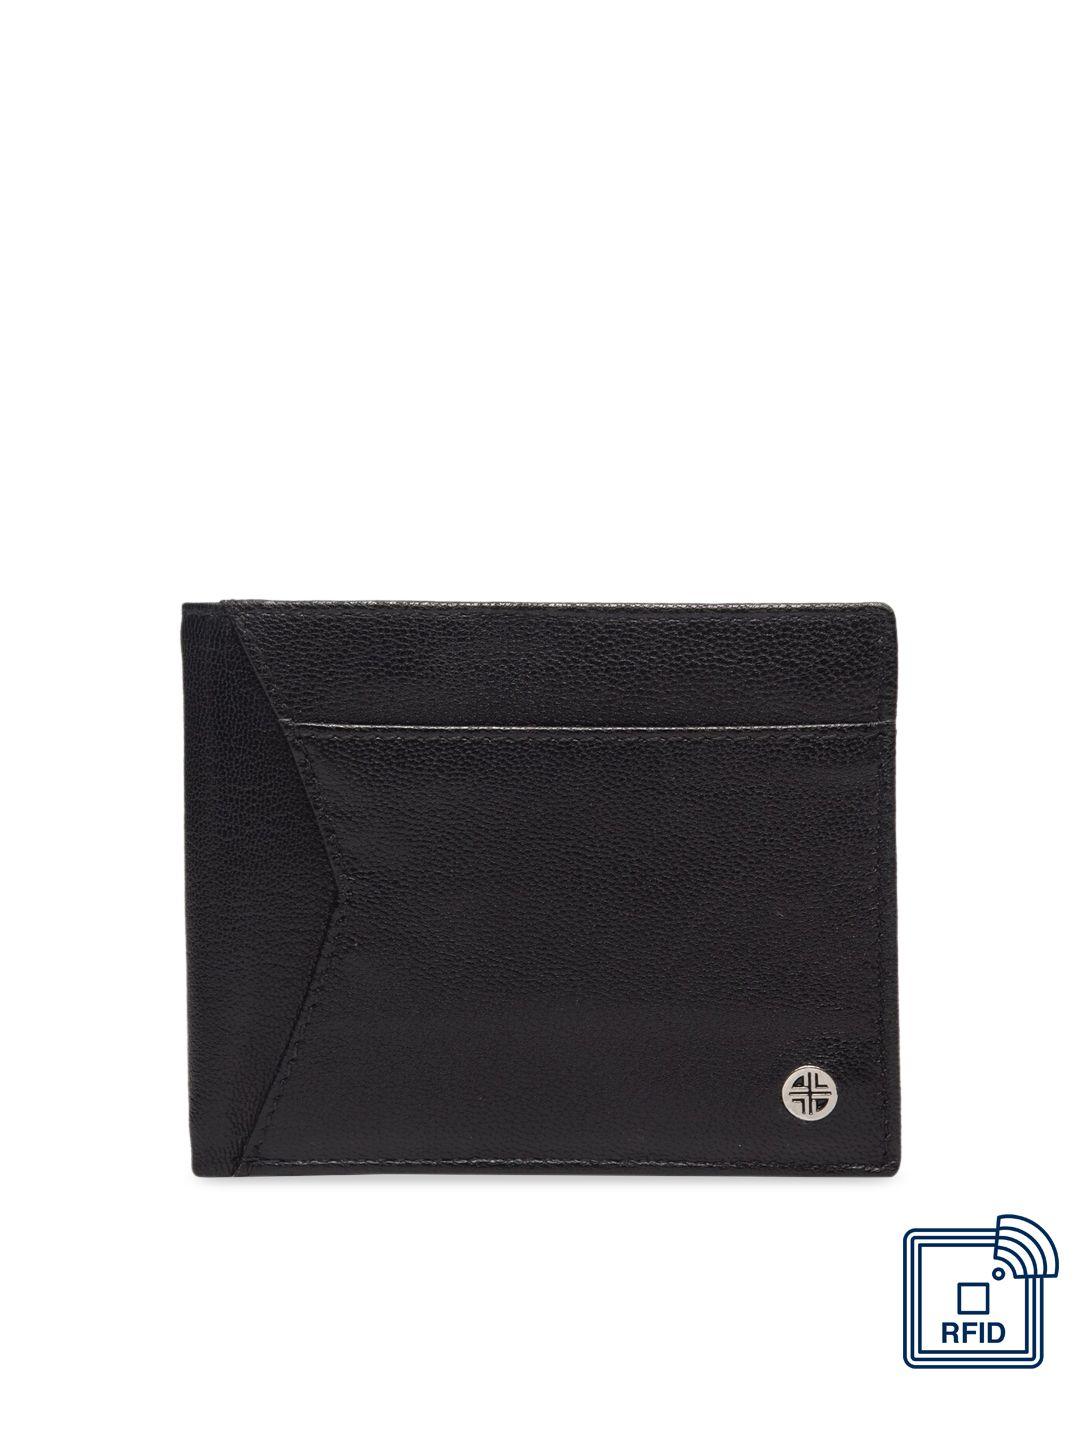 carlton london men black rfid textured leather two fold wallet